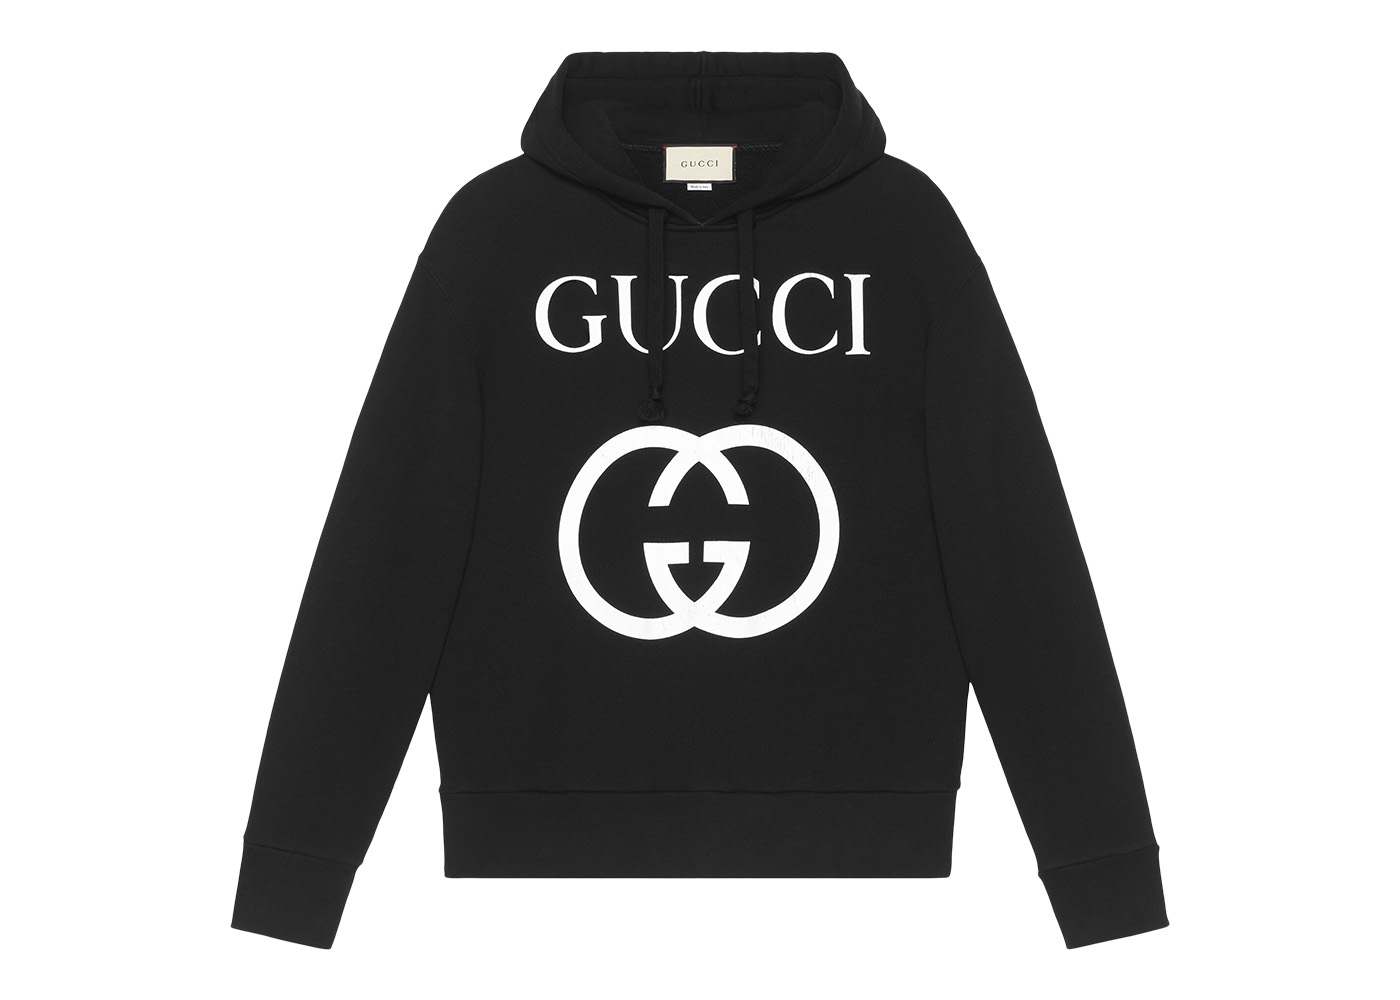 Gucci Interlocking G Oversize Fit Hoodie Black/White - FW22 - US